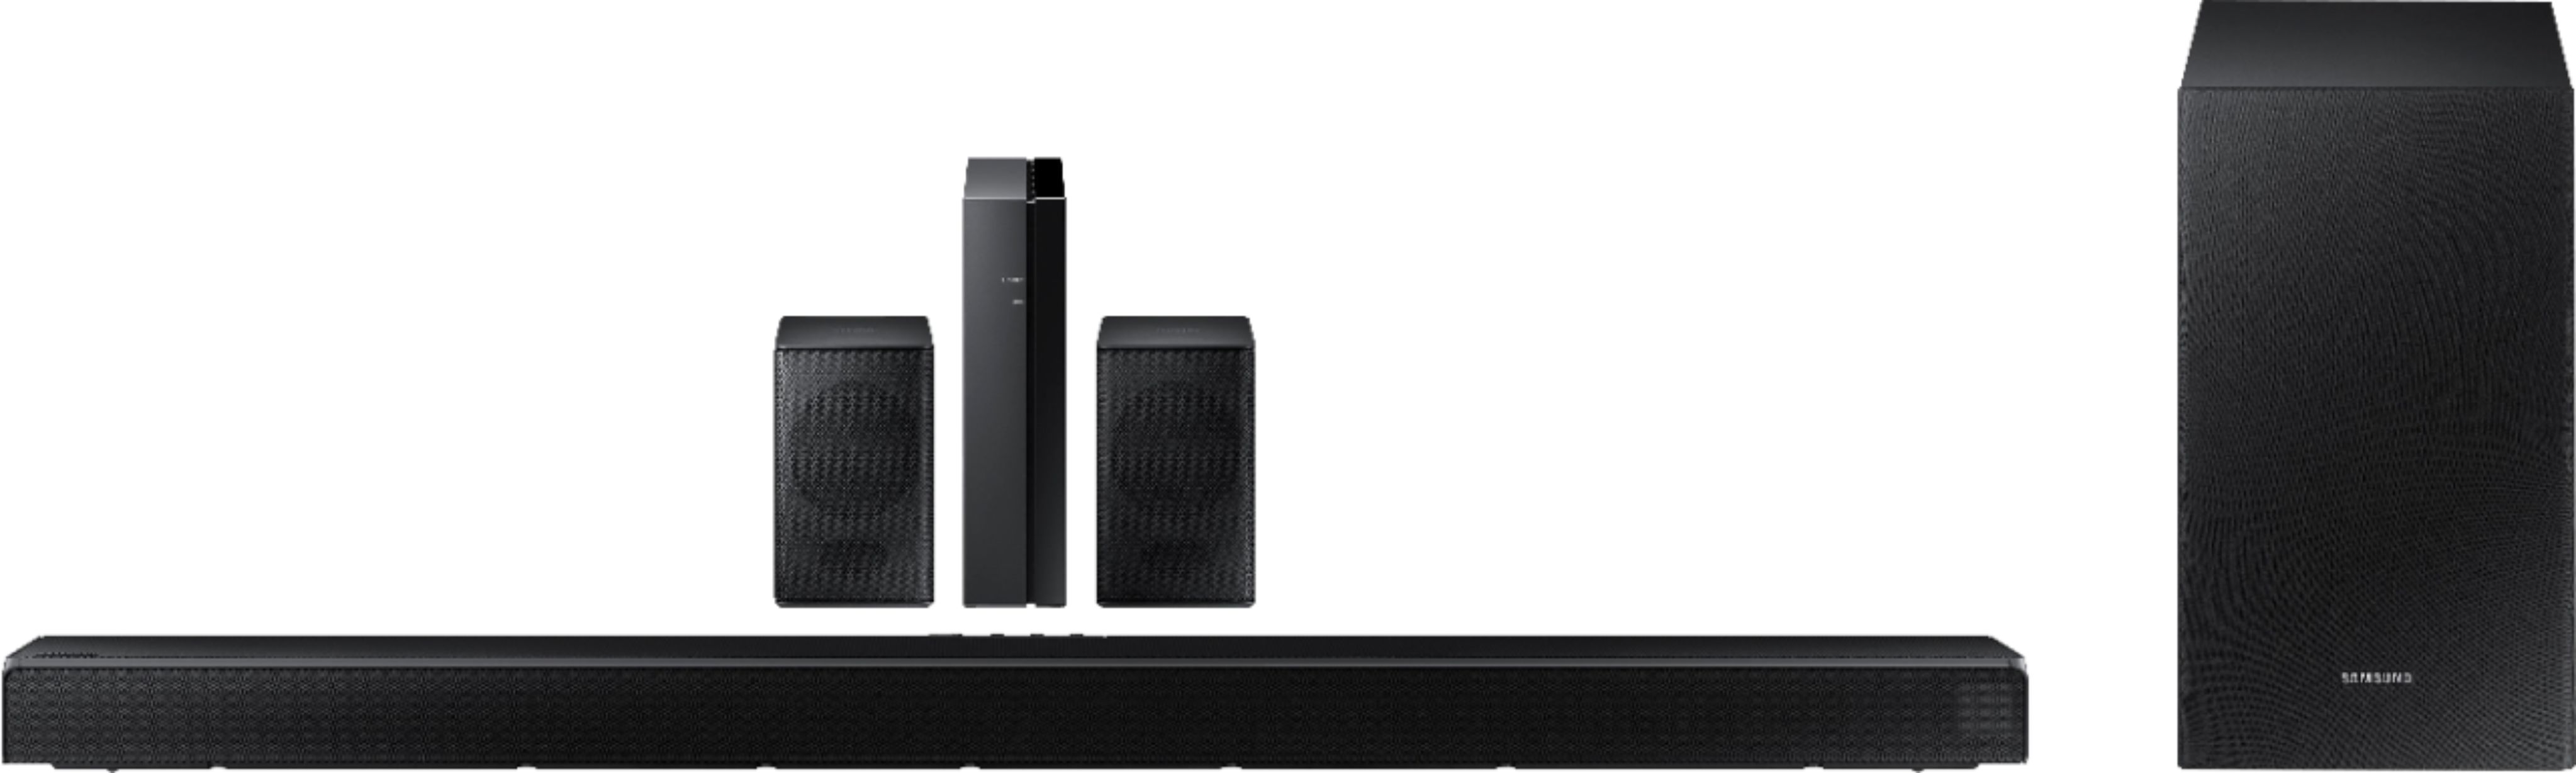 Samsung - 7.1-Channel Soundbar with Dolby 5.1/DTS Virtual:X - Black $399.99